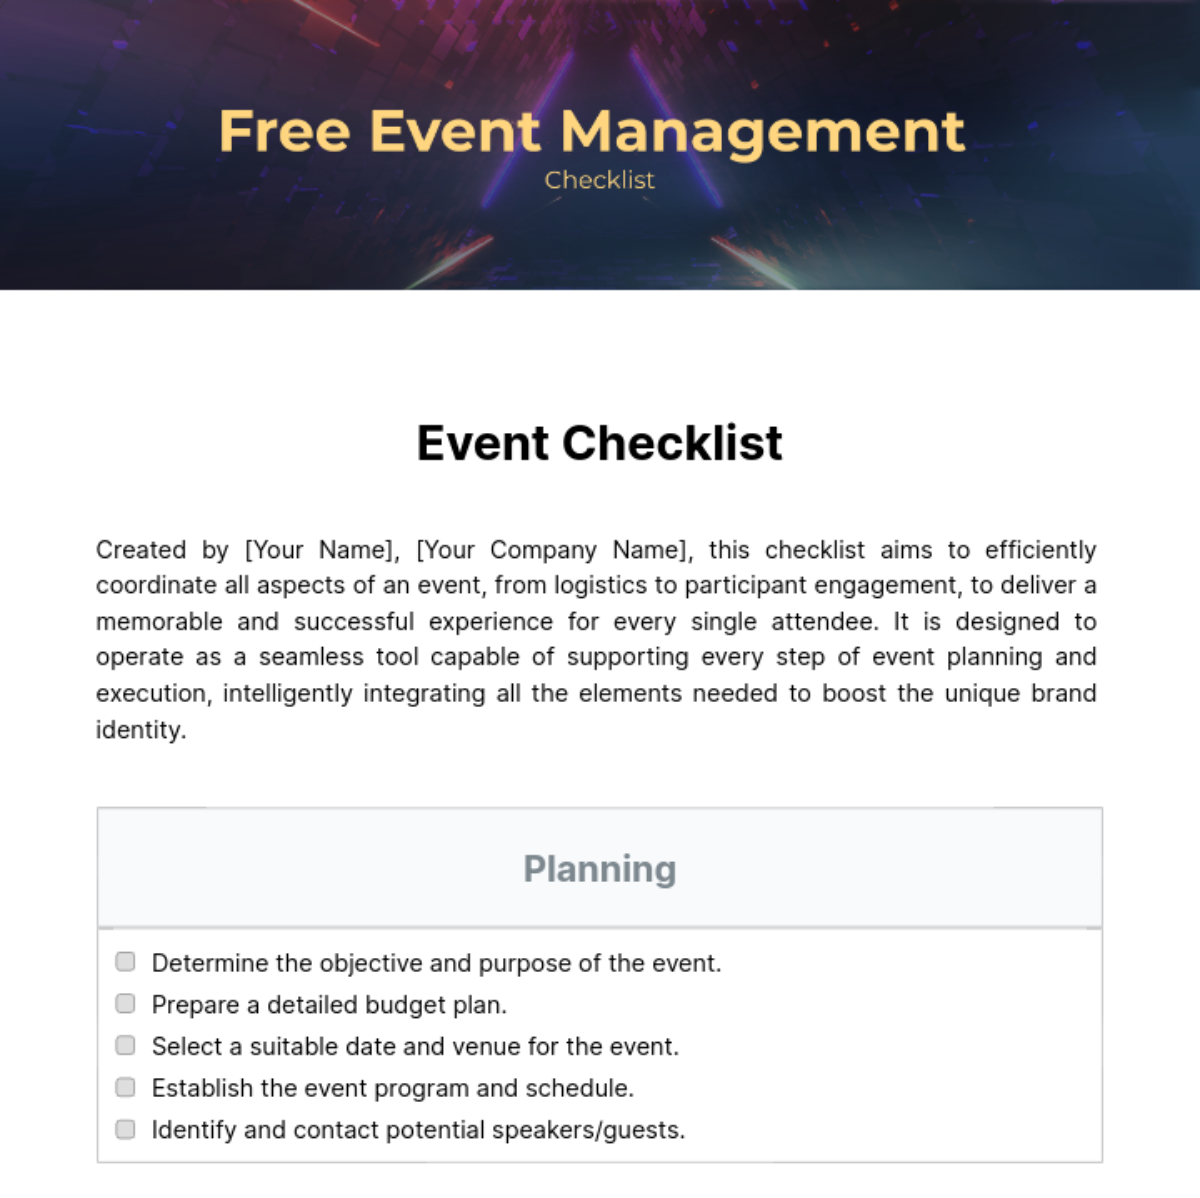 Free Event Management Checklist Template